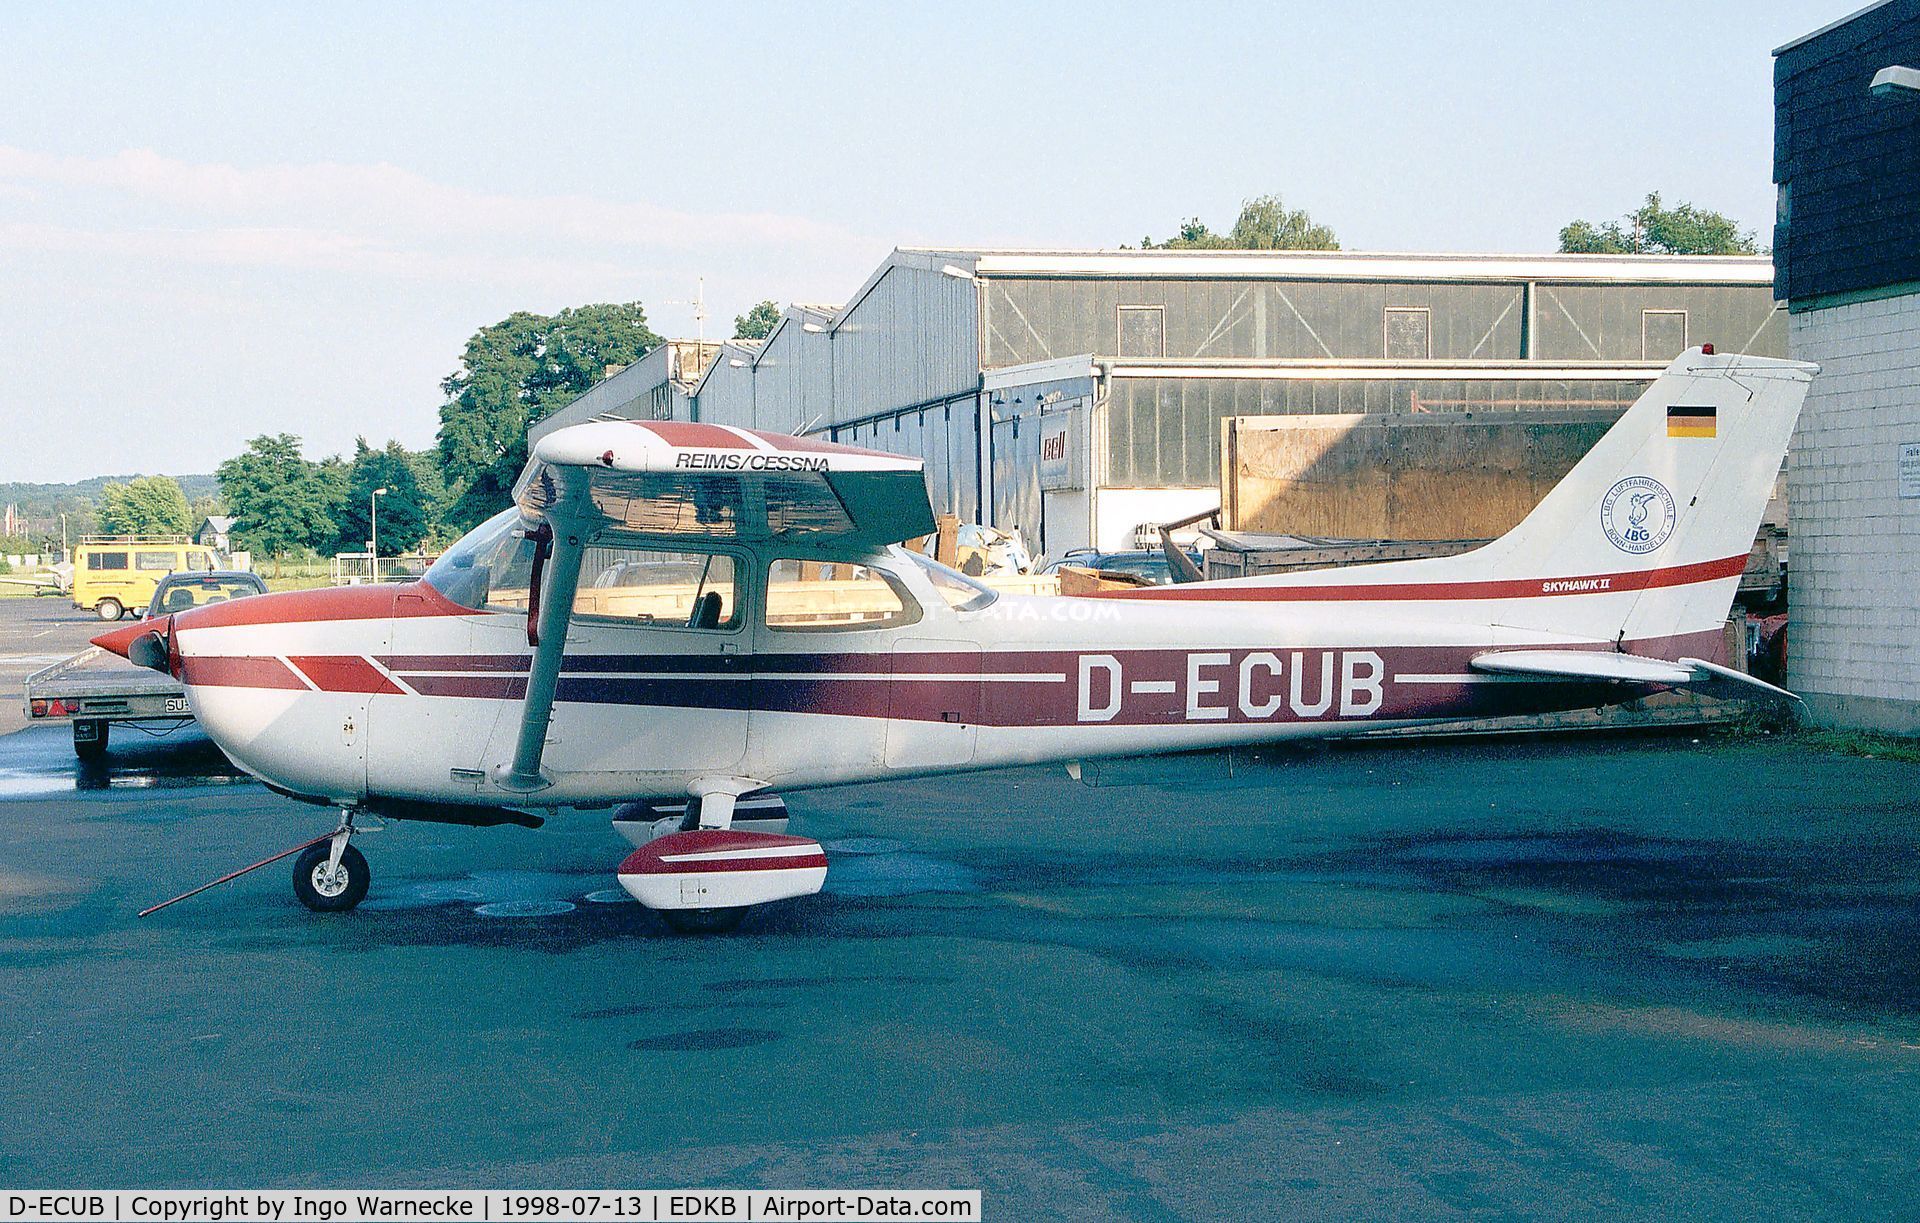 D-ECUB, 1979 Reims F172N Skyhawk C/N 1823, Cessna (Reims) F172N Skyhawk II at Bonn-Hangelar airfield